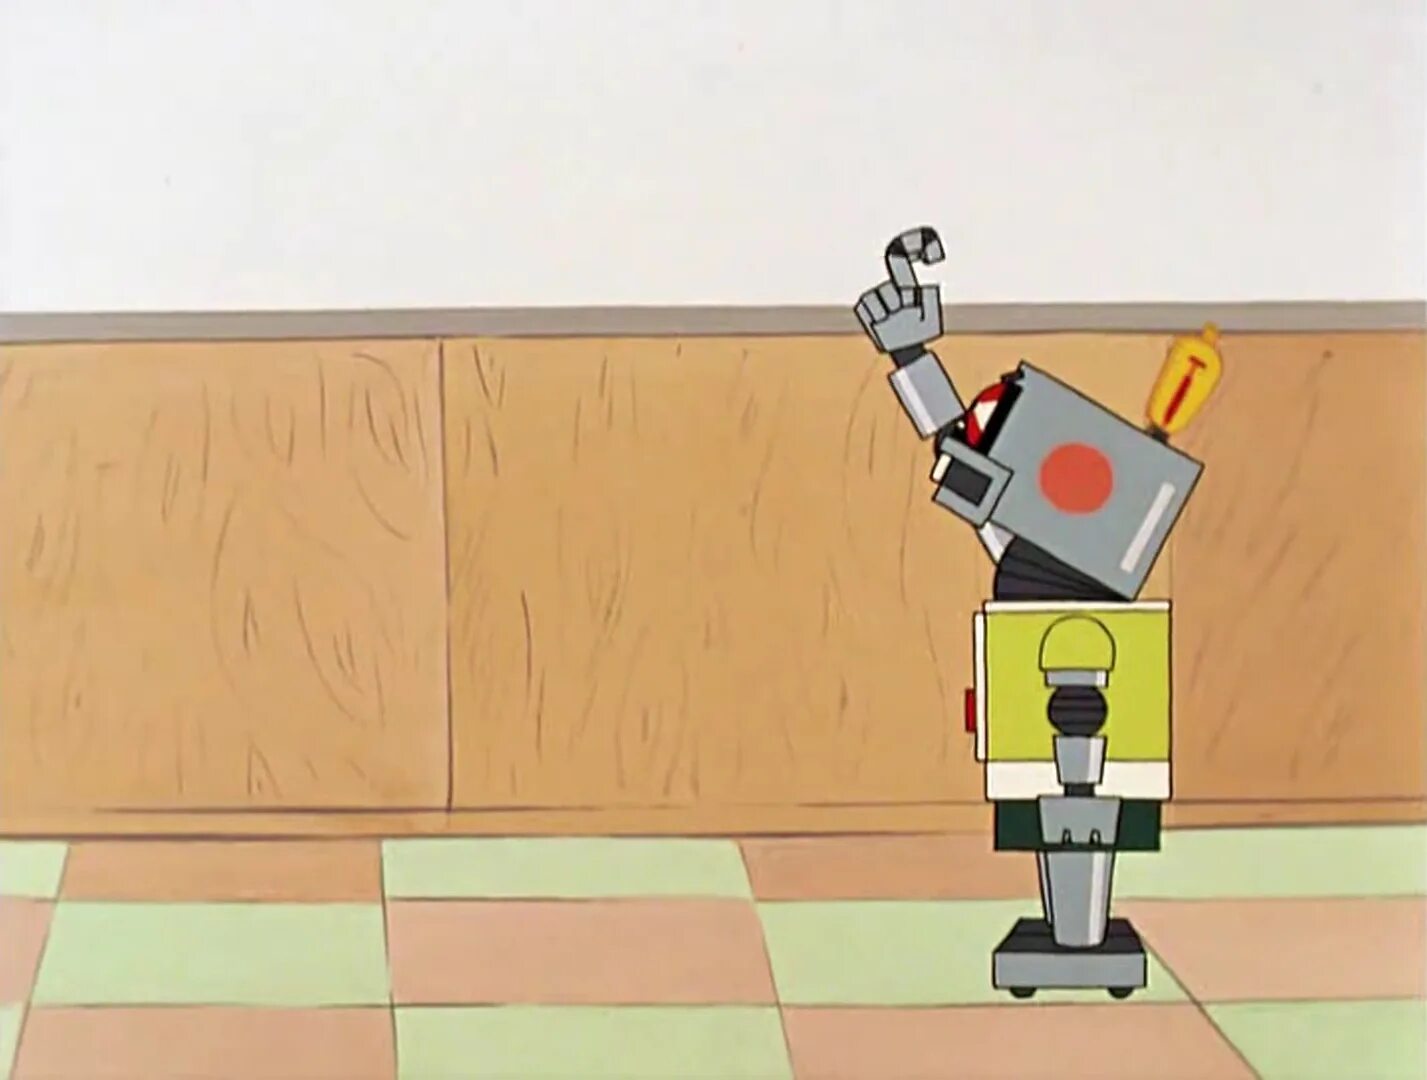 Robot episode. Ну погоди заяц-волк робот. Робозаяц ну погоди. Робот заяц из ну погоди. Ну погоди 14 выпуск робот заяц.